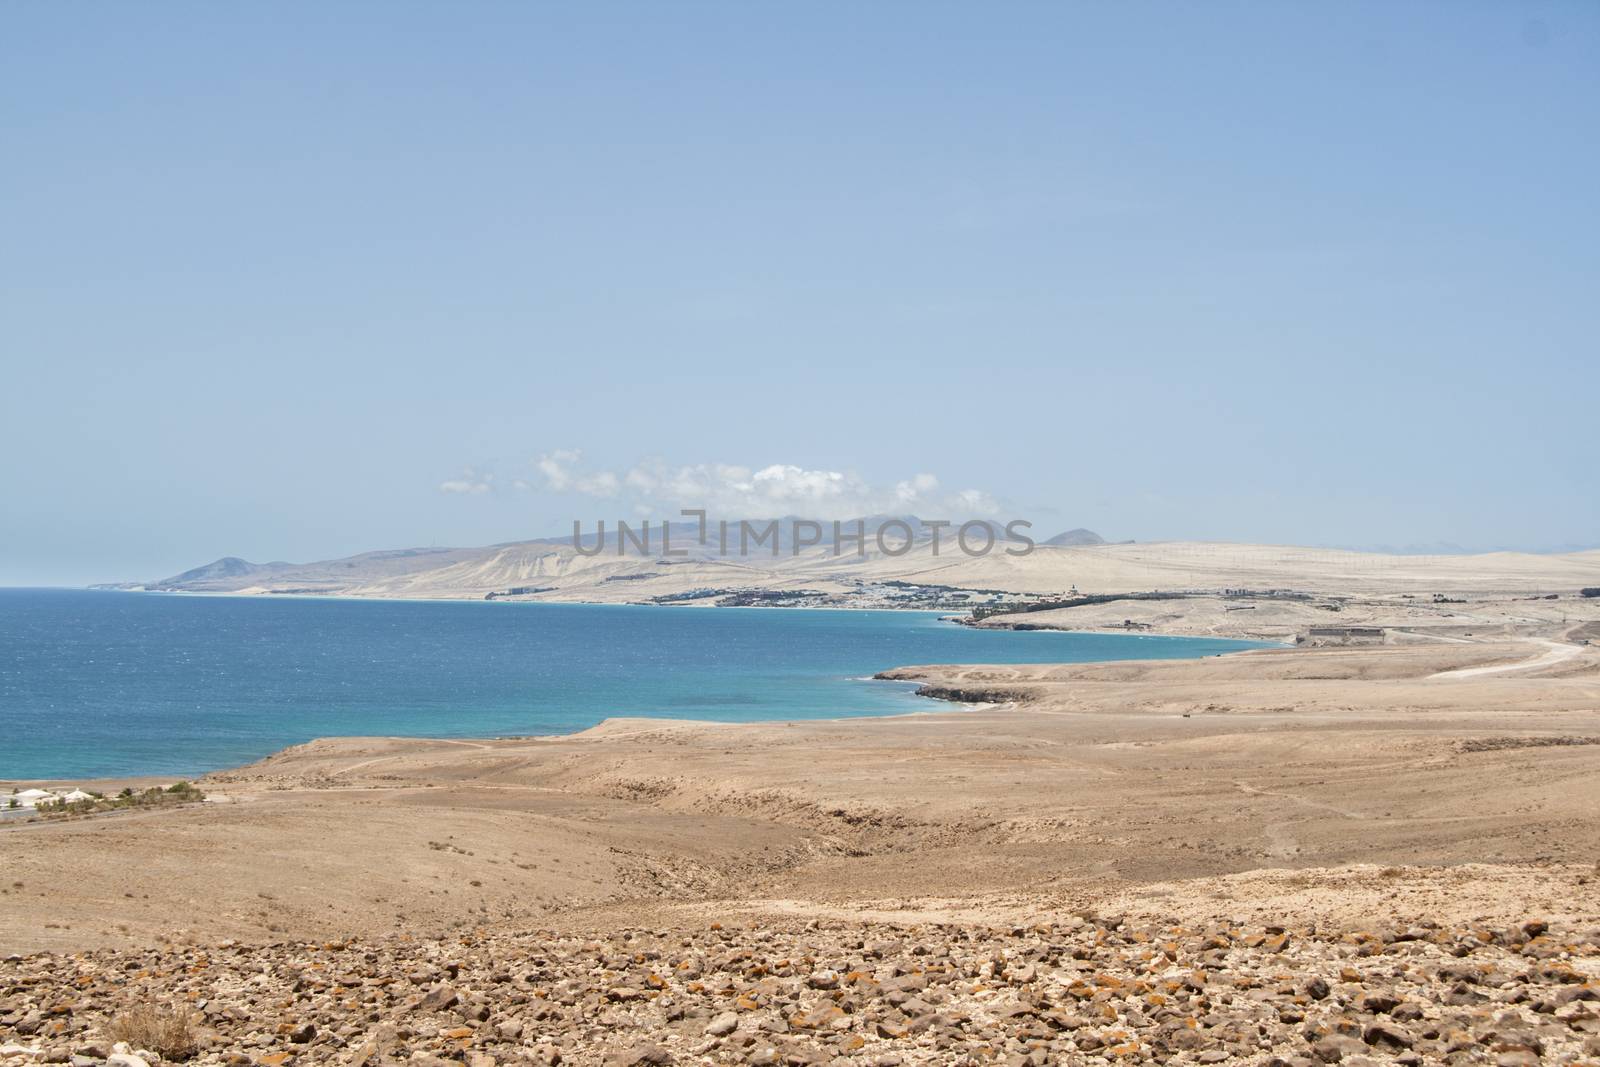 Fuerteventura volcanic landscape, Canari islands of Spain by tanaonte